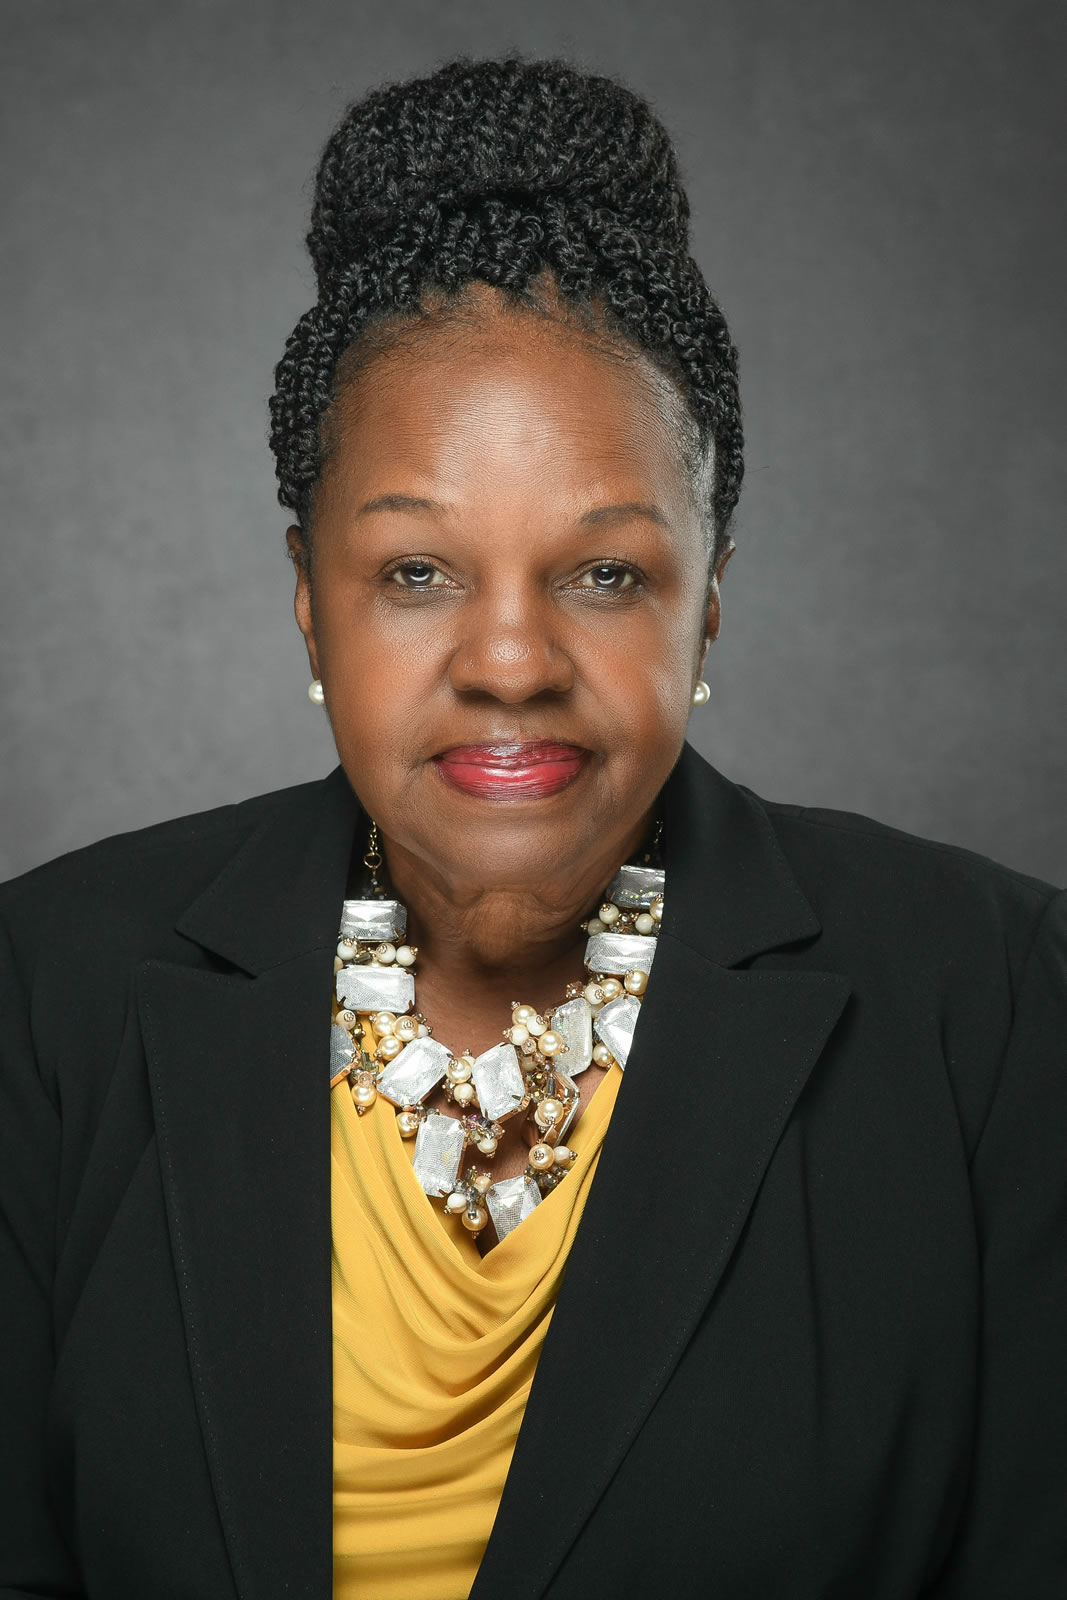 Ora Rice, Ph.D., LMSW - Title IV-E Child Welfare Workforce Development Coordinator and Lecturer